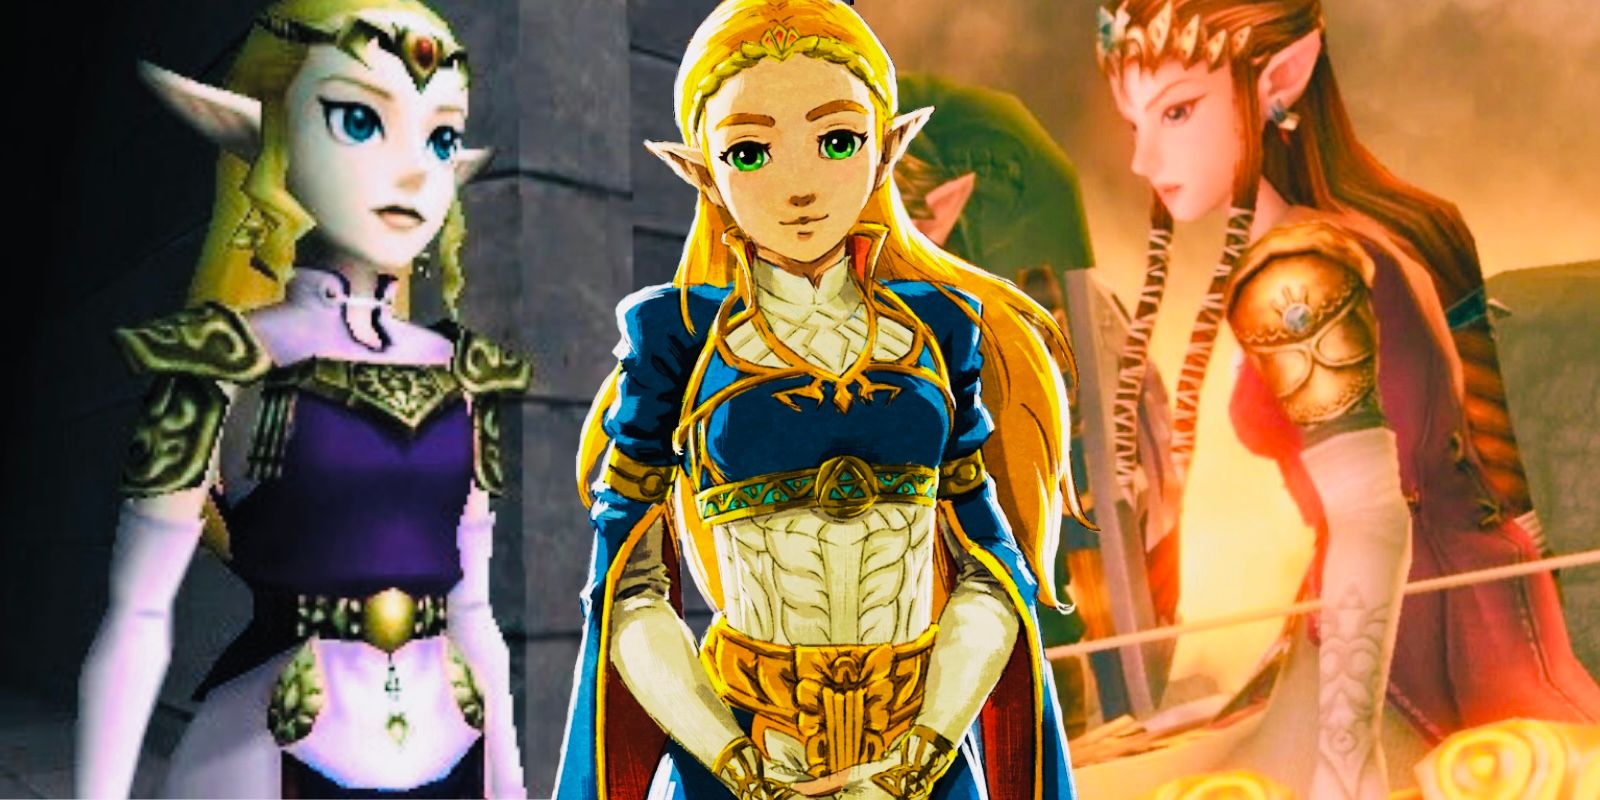 Princess Zelda in Ocarina of Time, Twilight Princess and Breath of the Wild